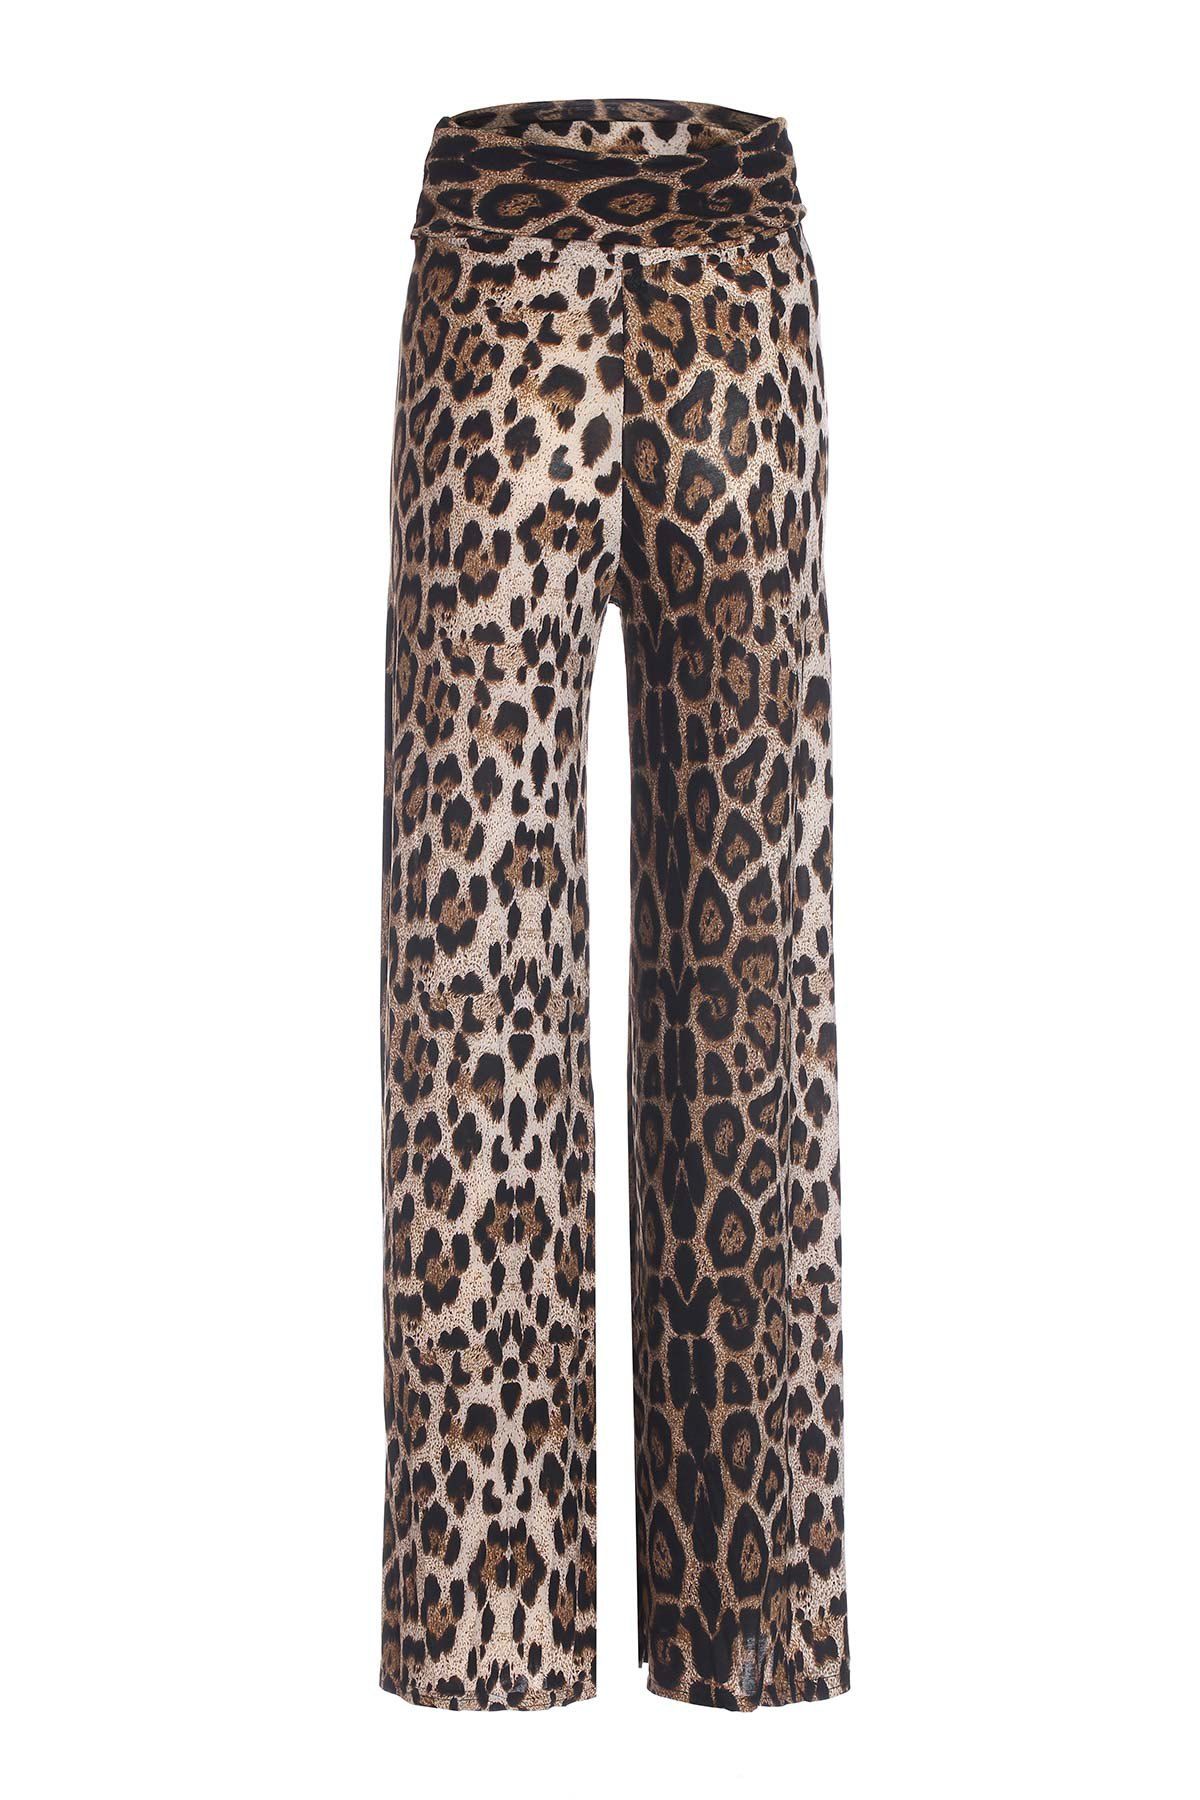 [63% OFF] Wide Leg Leopard Print Palazzo Pants | Rosegal